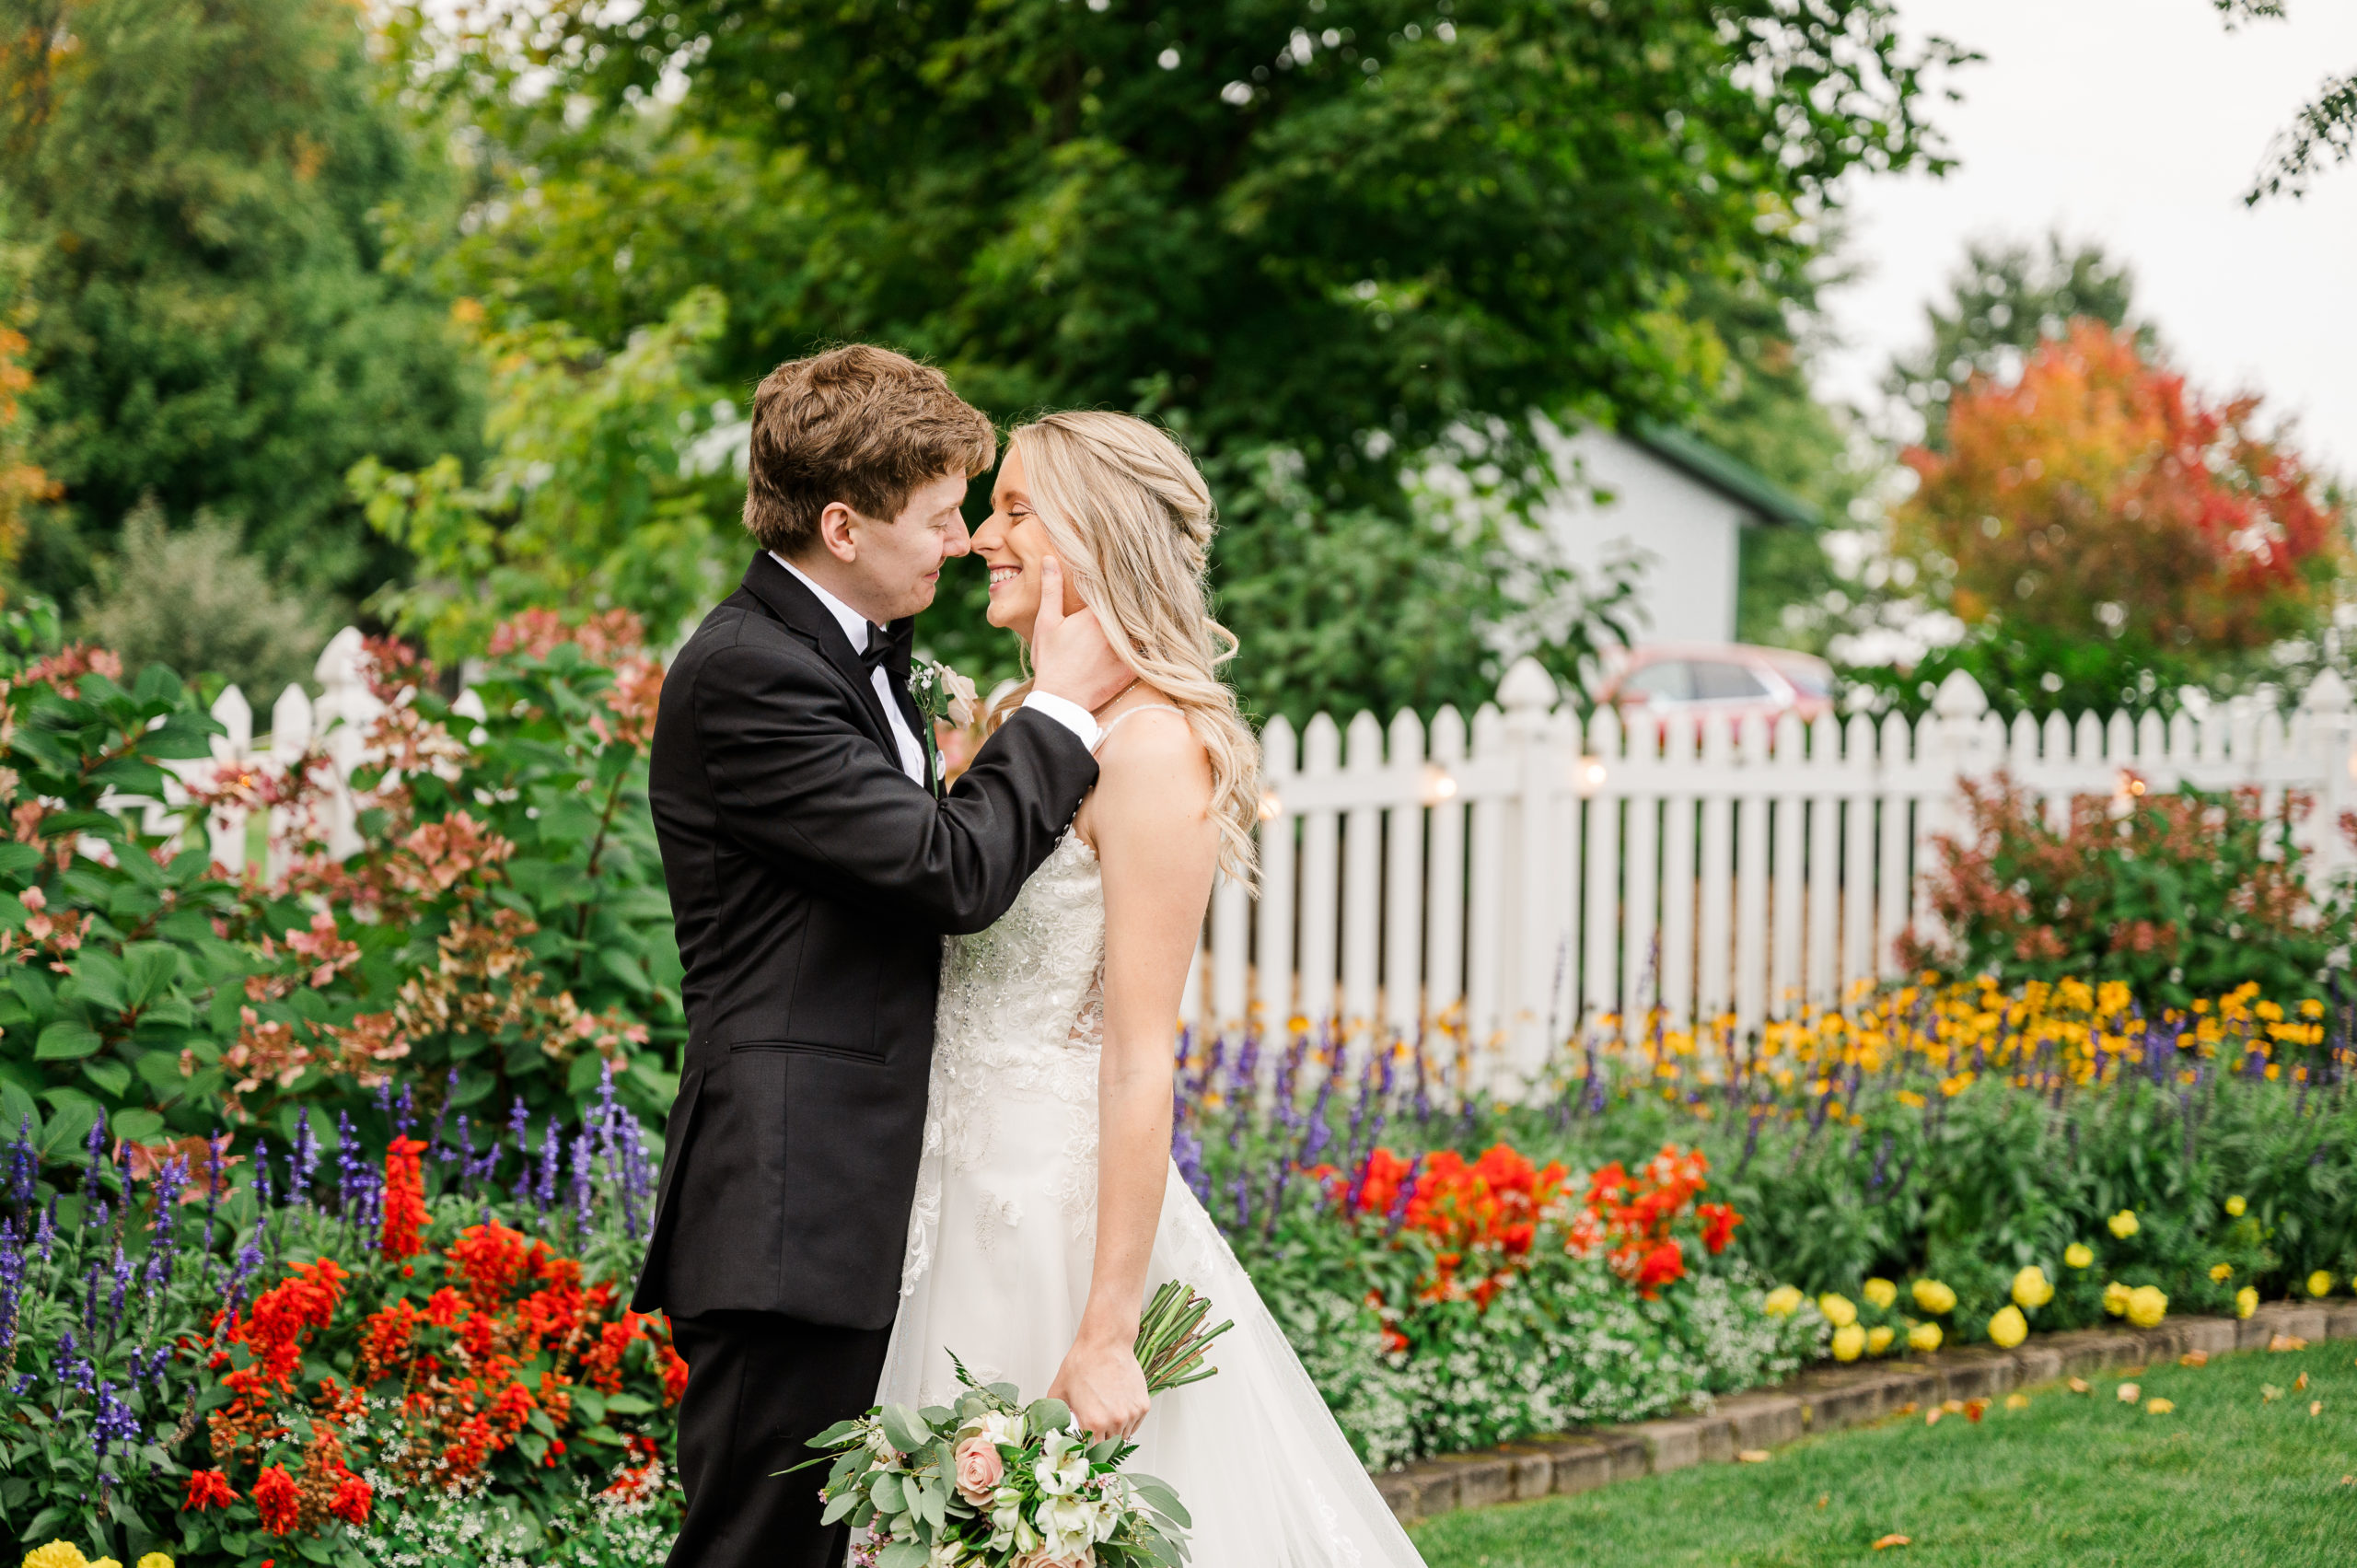 Mystical Rose Gardens wedding_Erica Johanna Photography